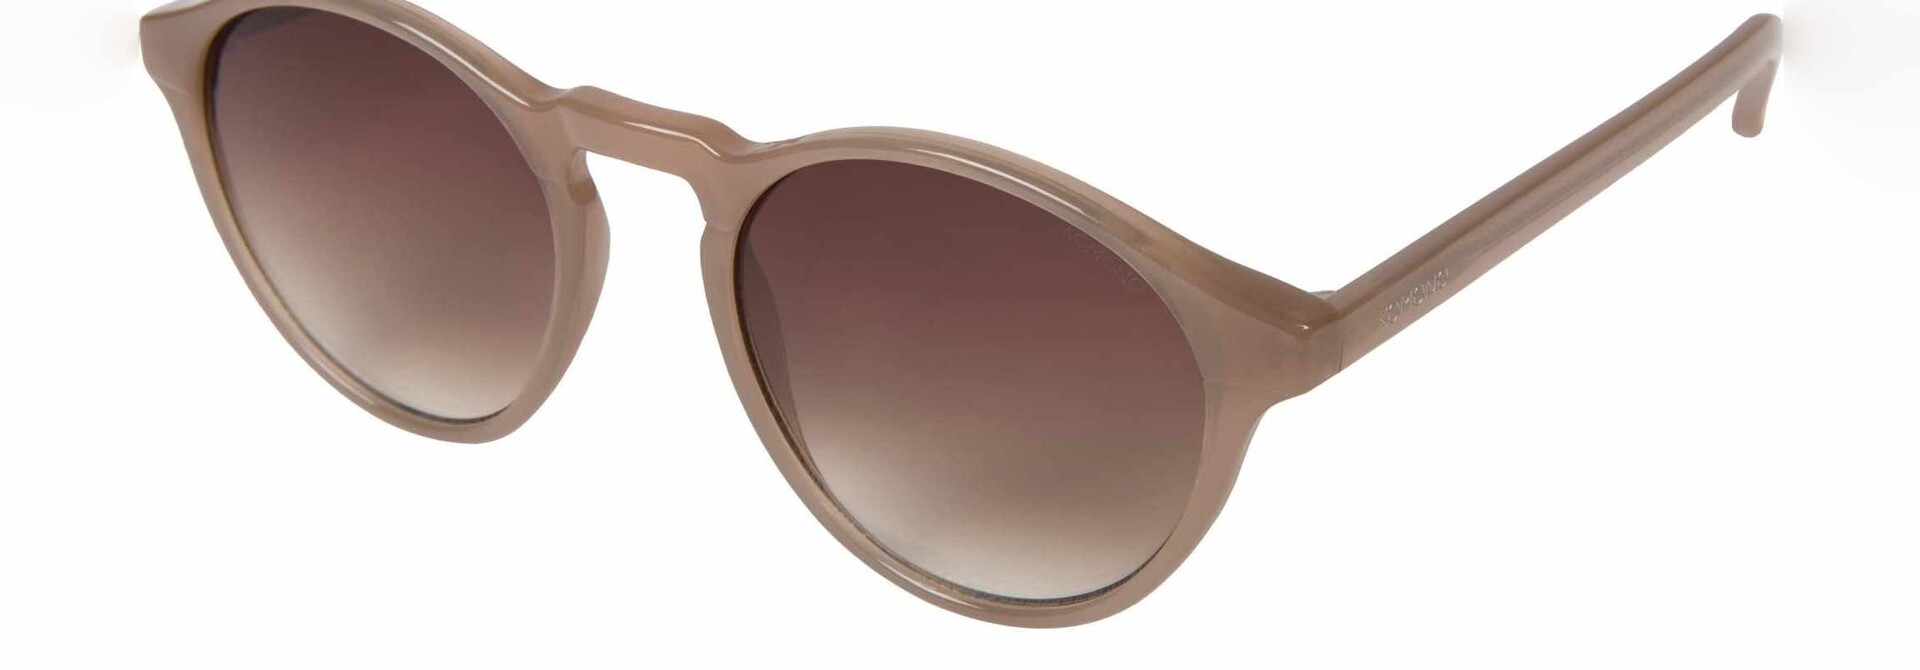 ♣ Devon Sahara Sunglasses